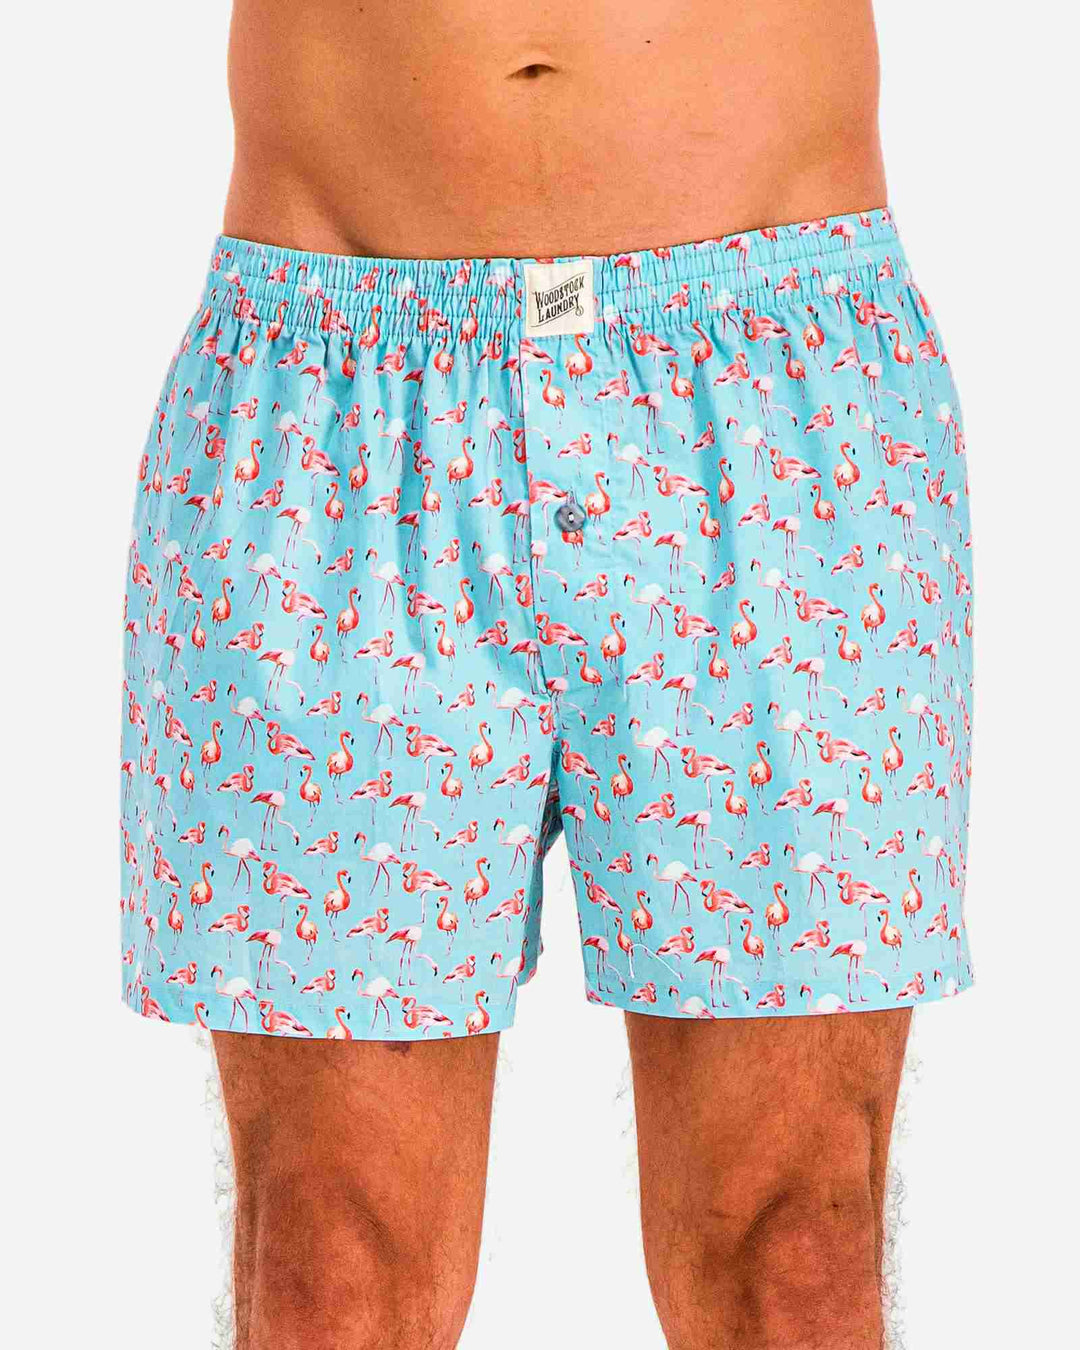 Mens boxer shorts - Light blue flamingos